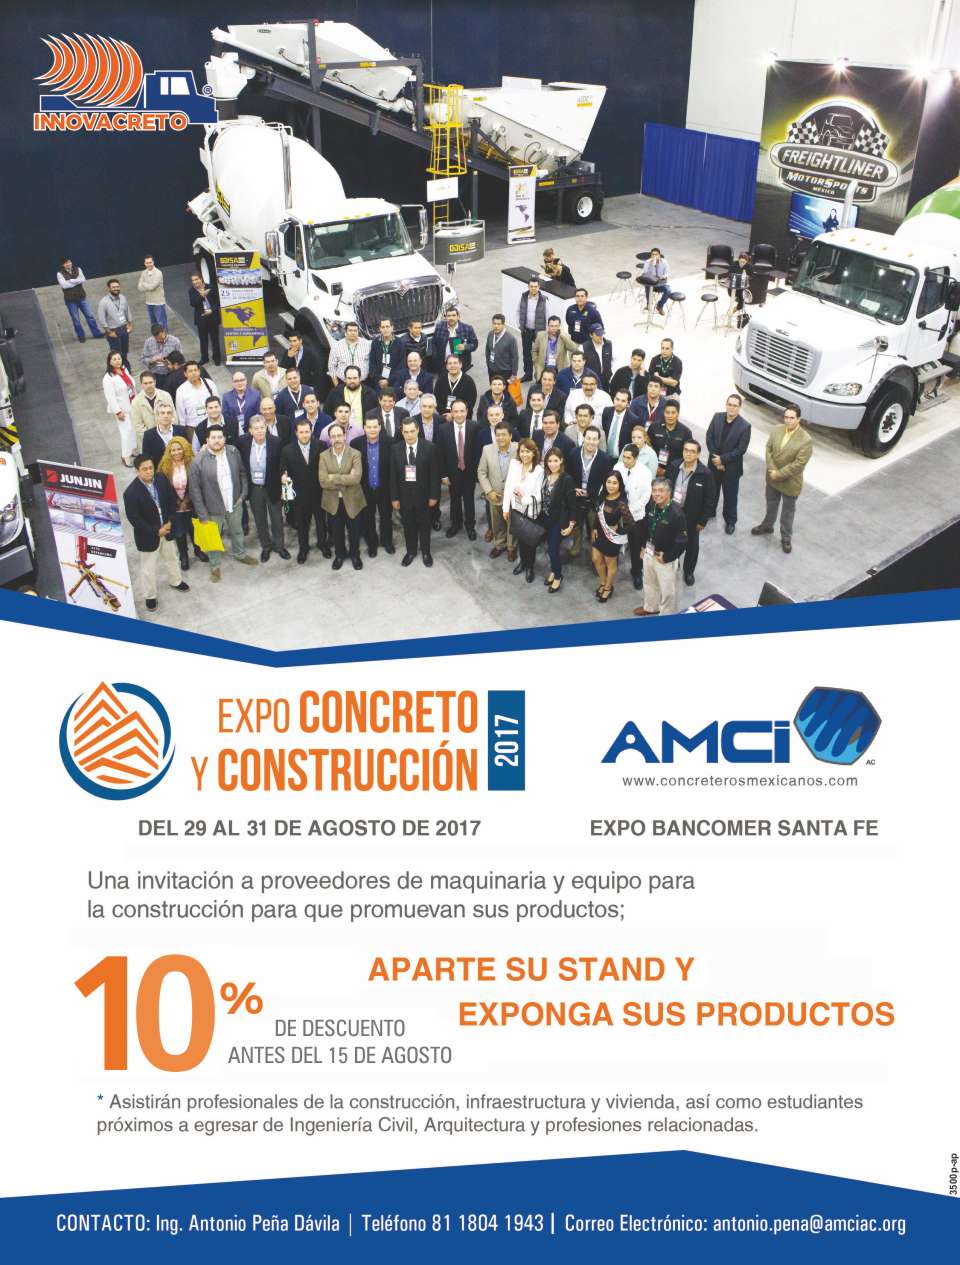 EXPO CONCRETO AMCI at Bancomer Santa Fe expo from August 29 to 31, 2017 CONGRESS AMCI EXPO CONCRETE ciudad de mexico